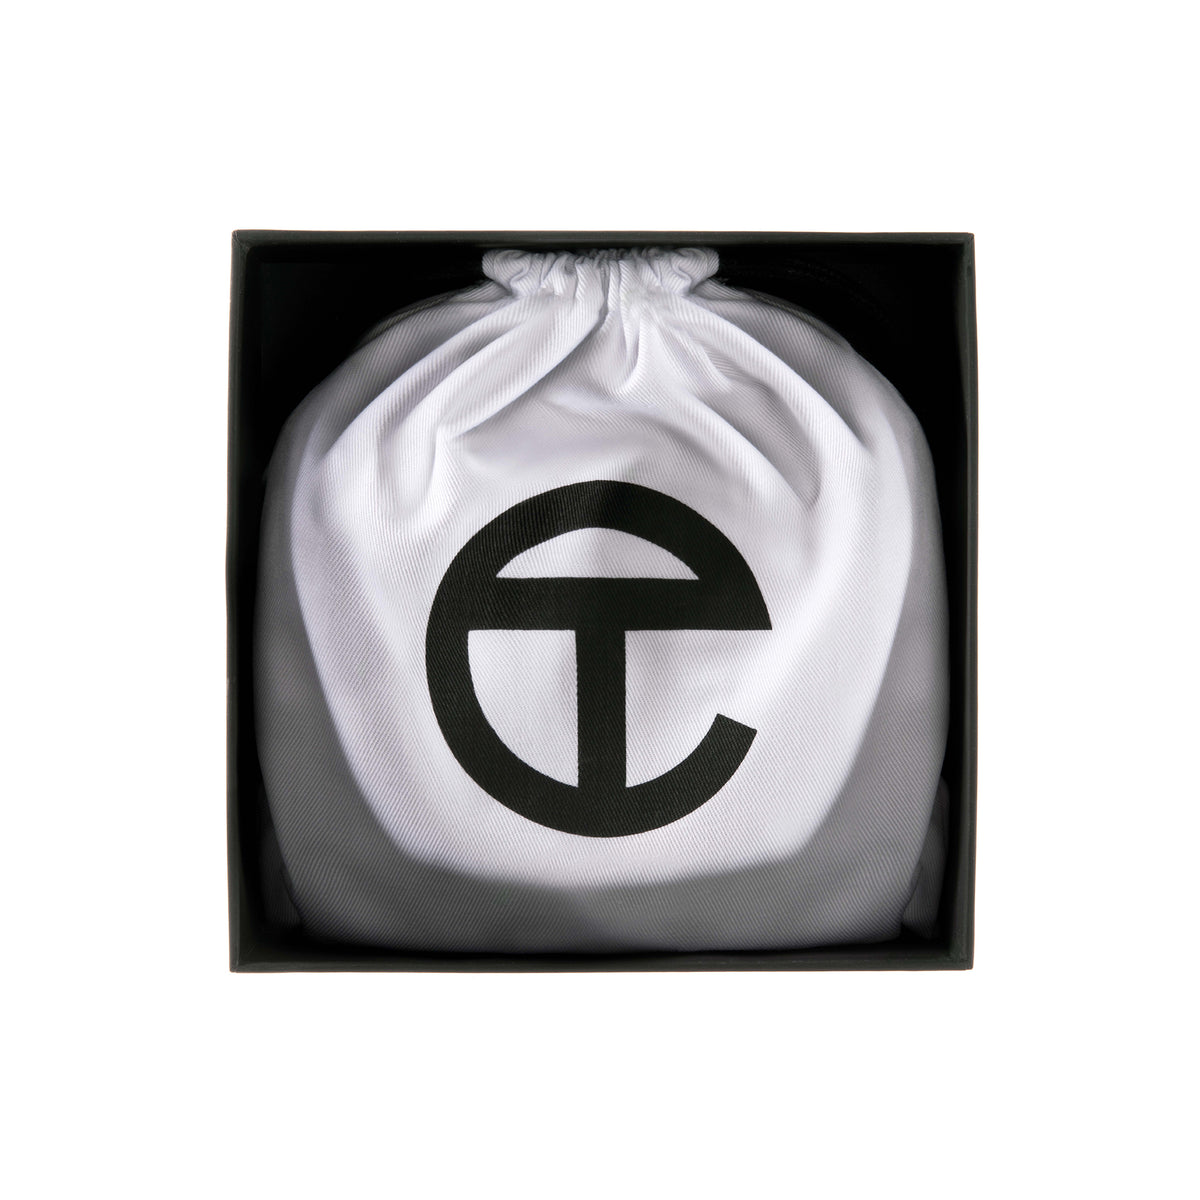 Logo Belt - Silver/Glue